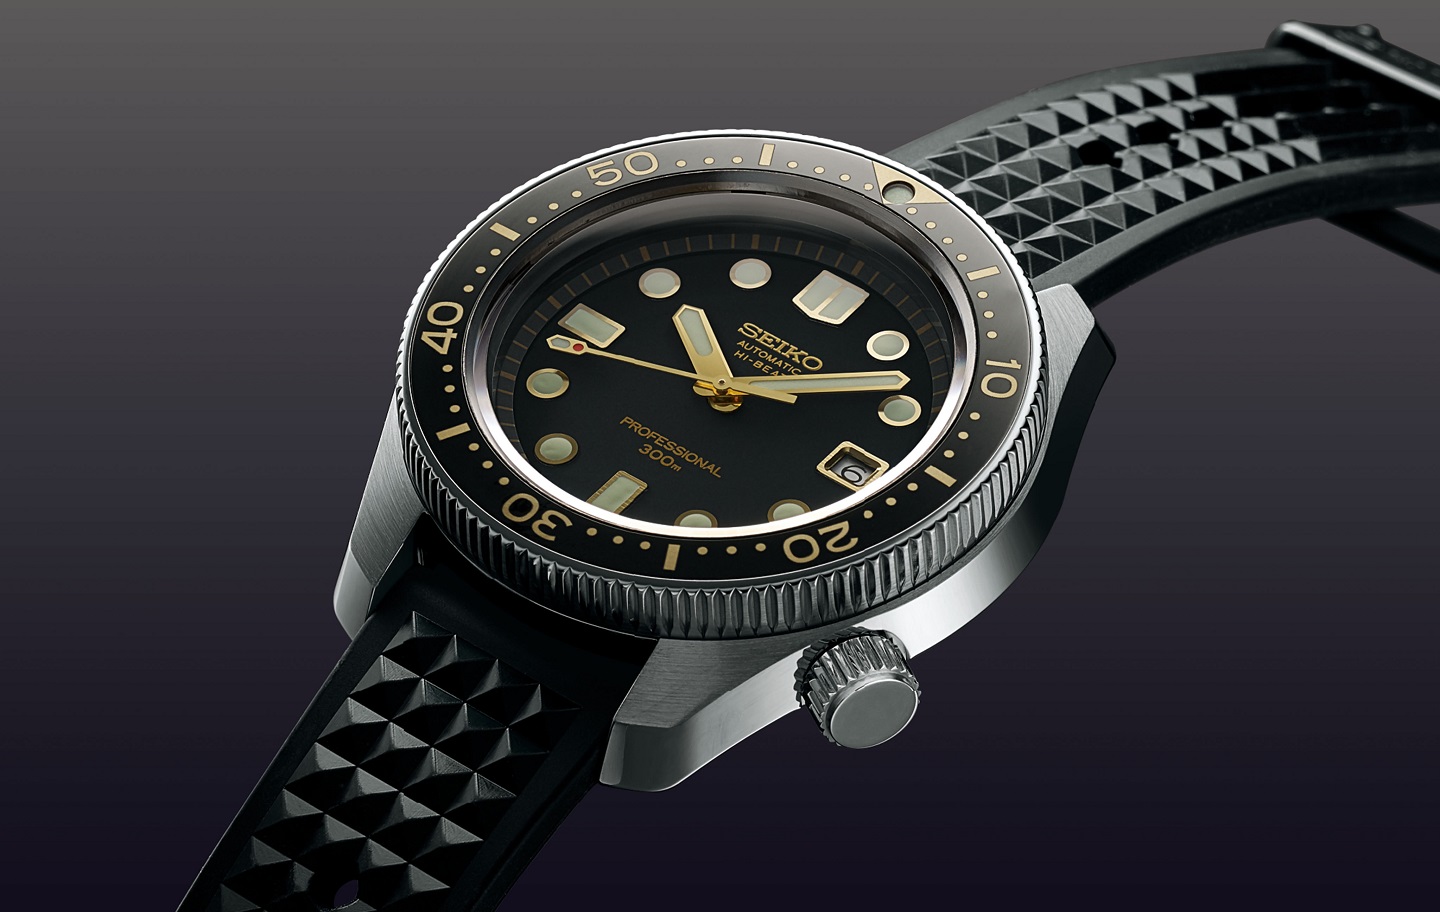 Prospex SLA025 Hi-Beat 300M Dive Watch | aBlogtoWatch